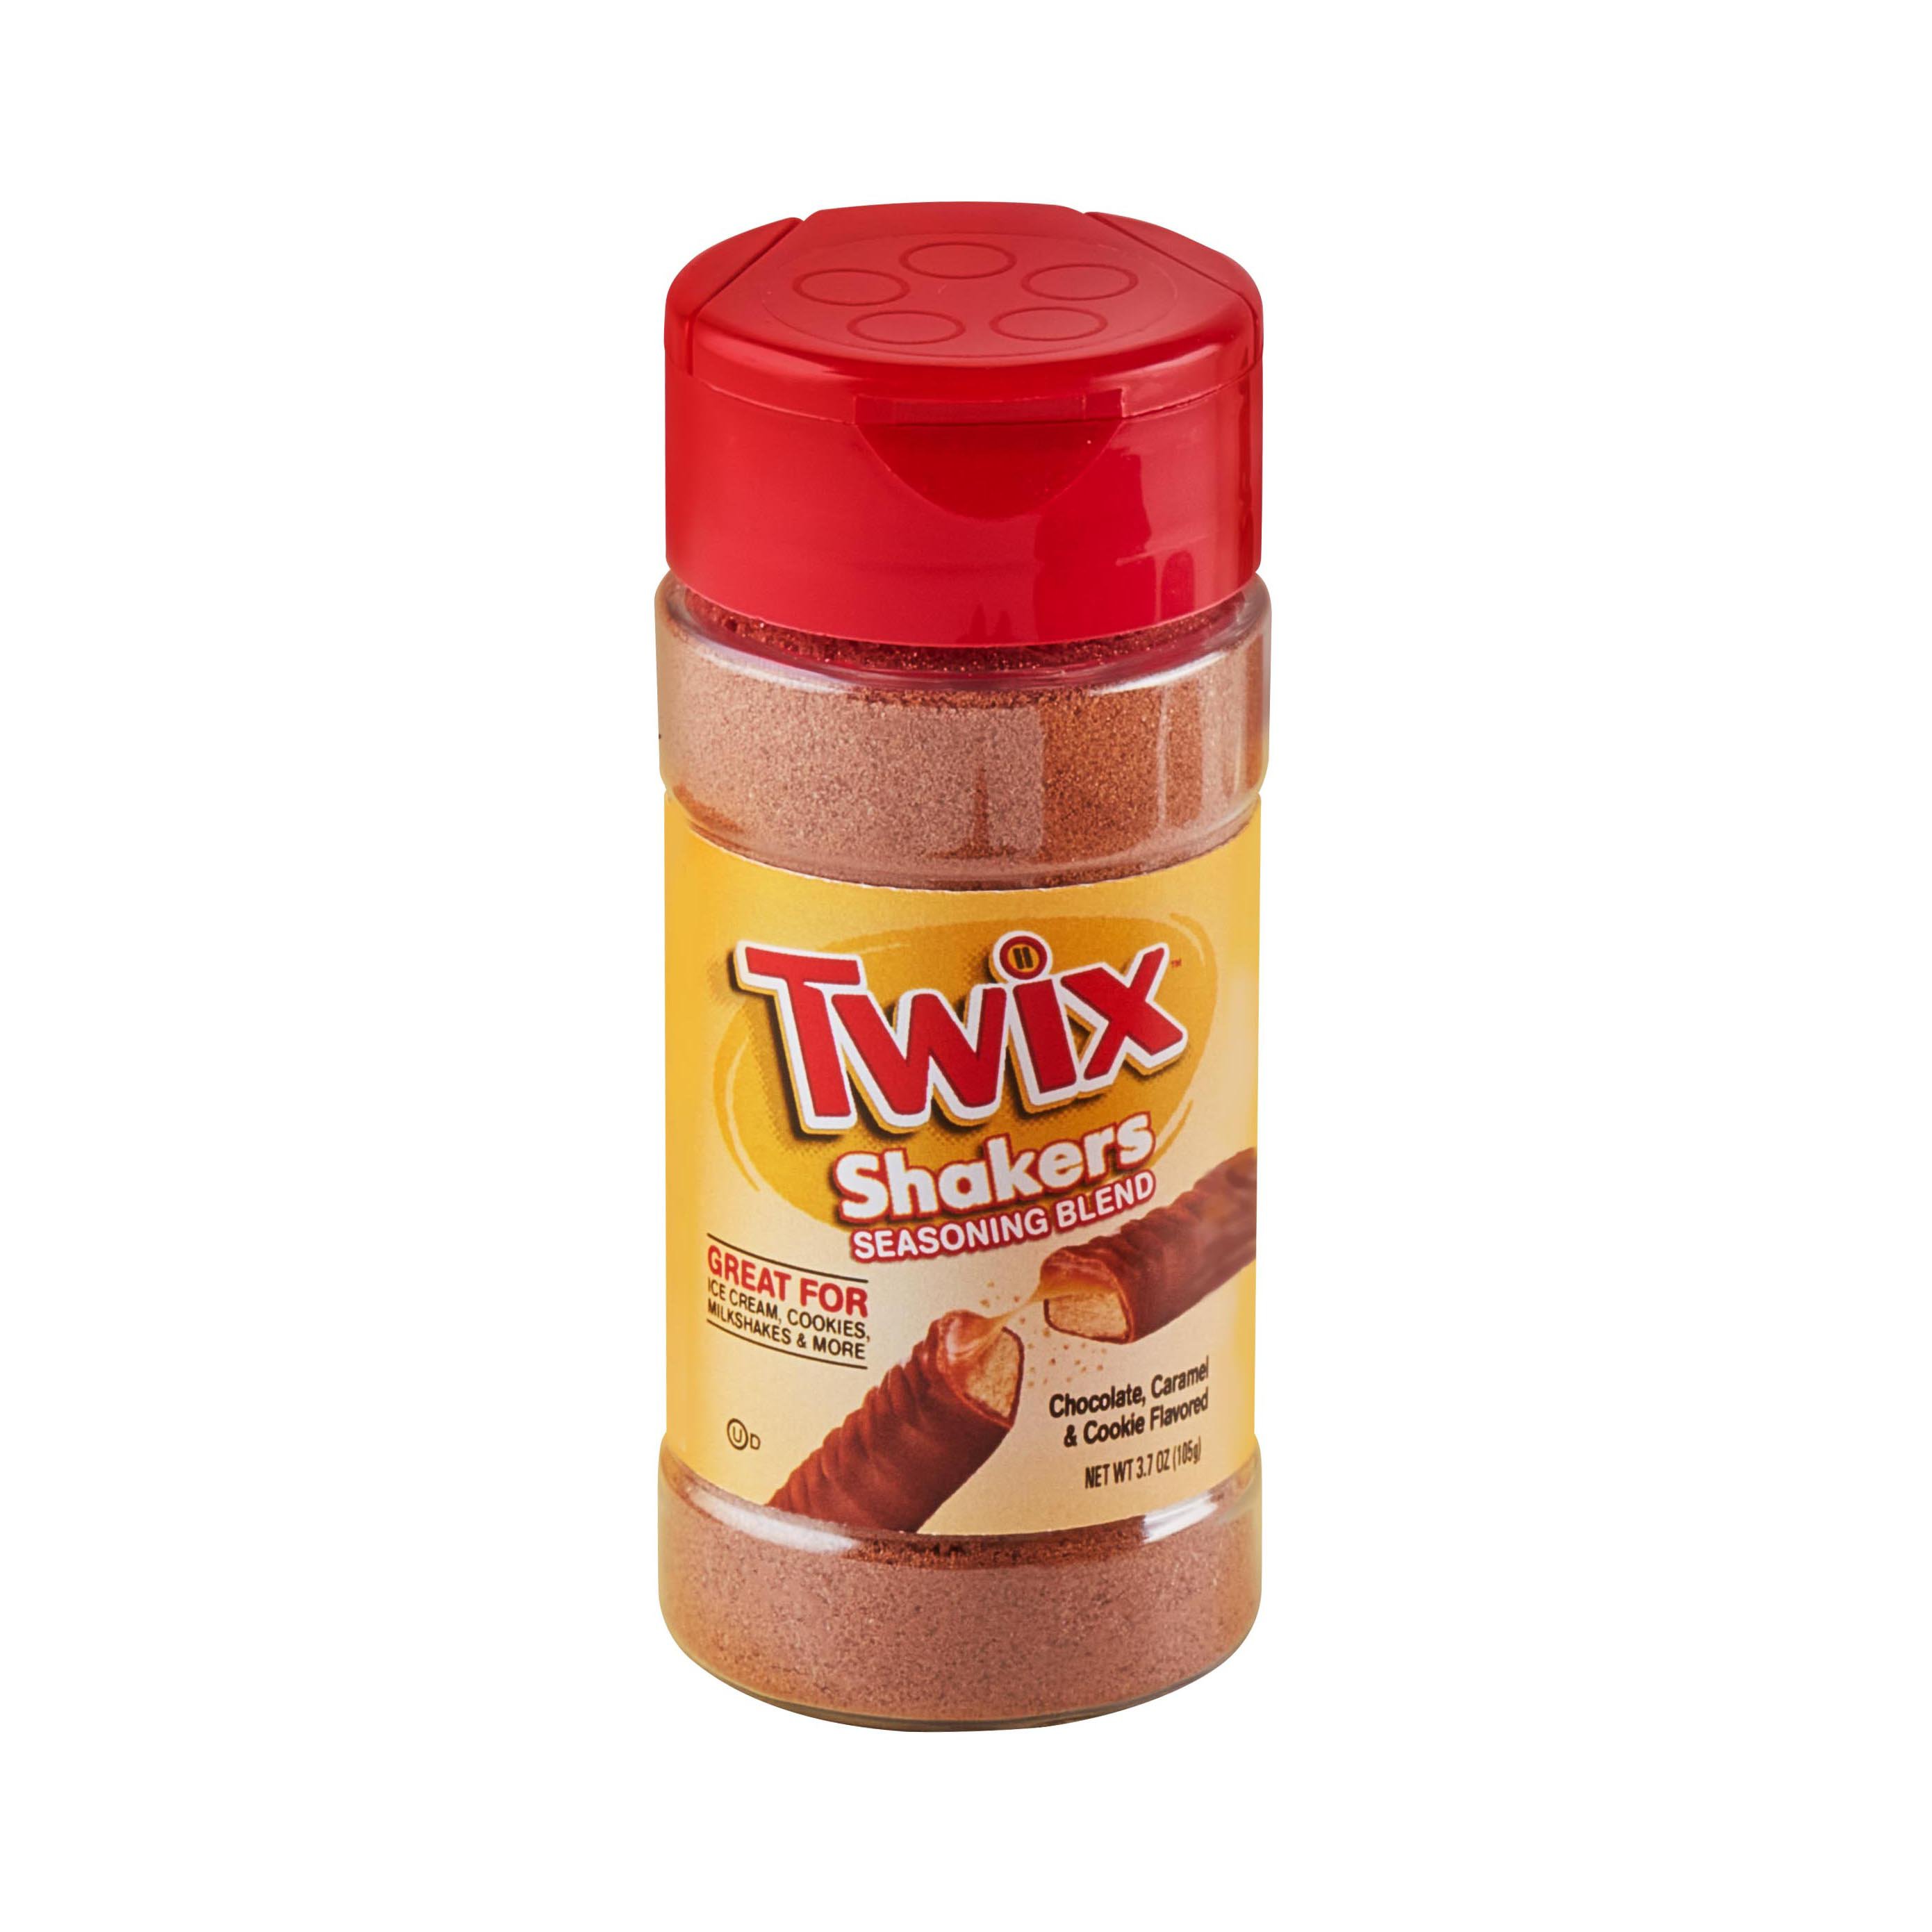 Twix Shakers Seasoning Blend - Shop Spice Mixes at H-E-B